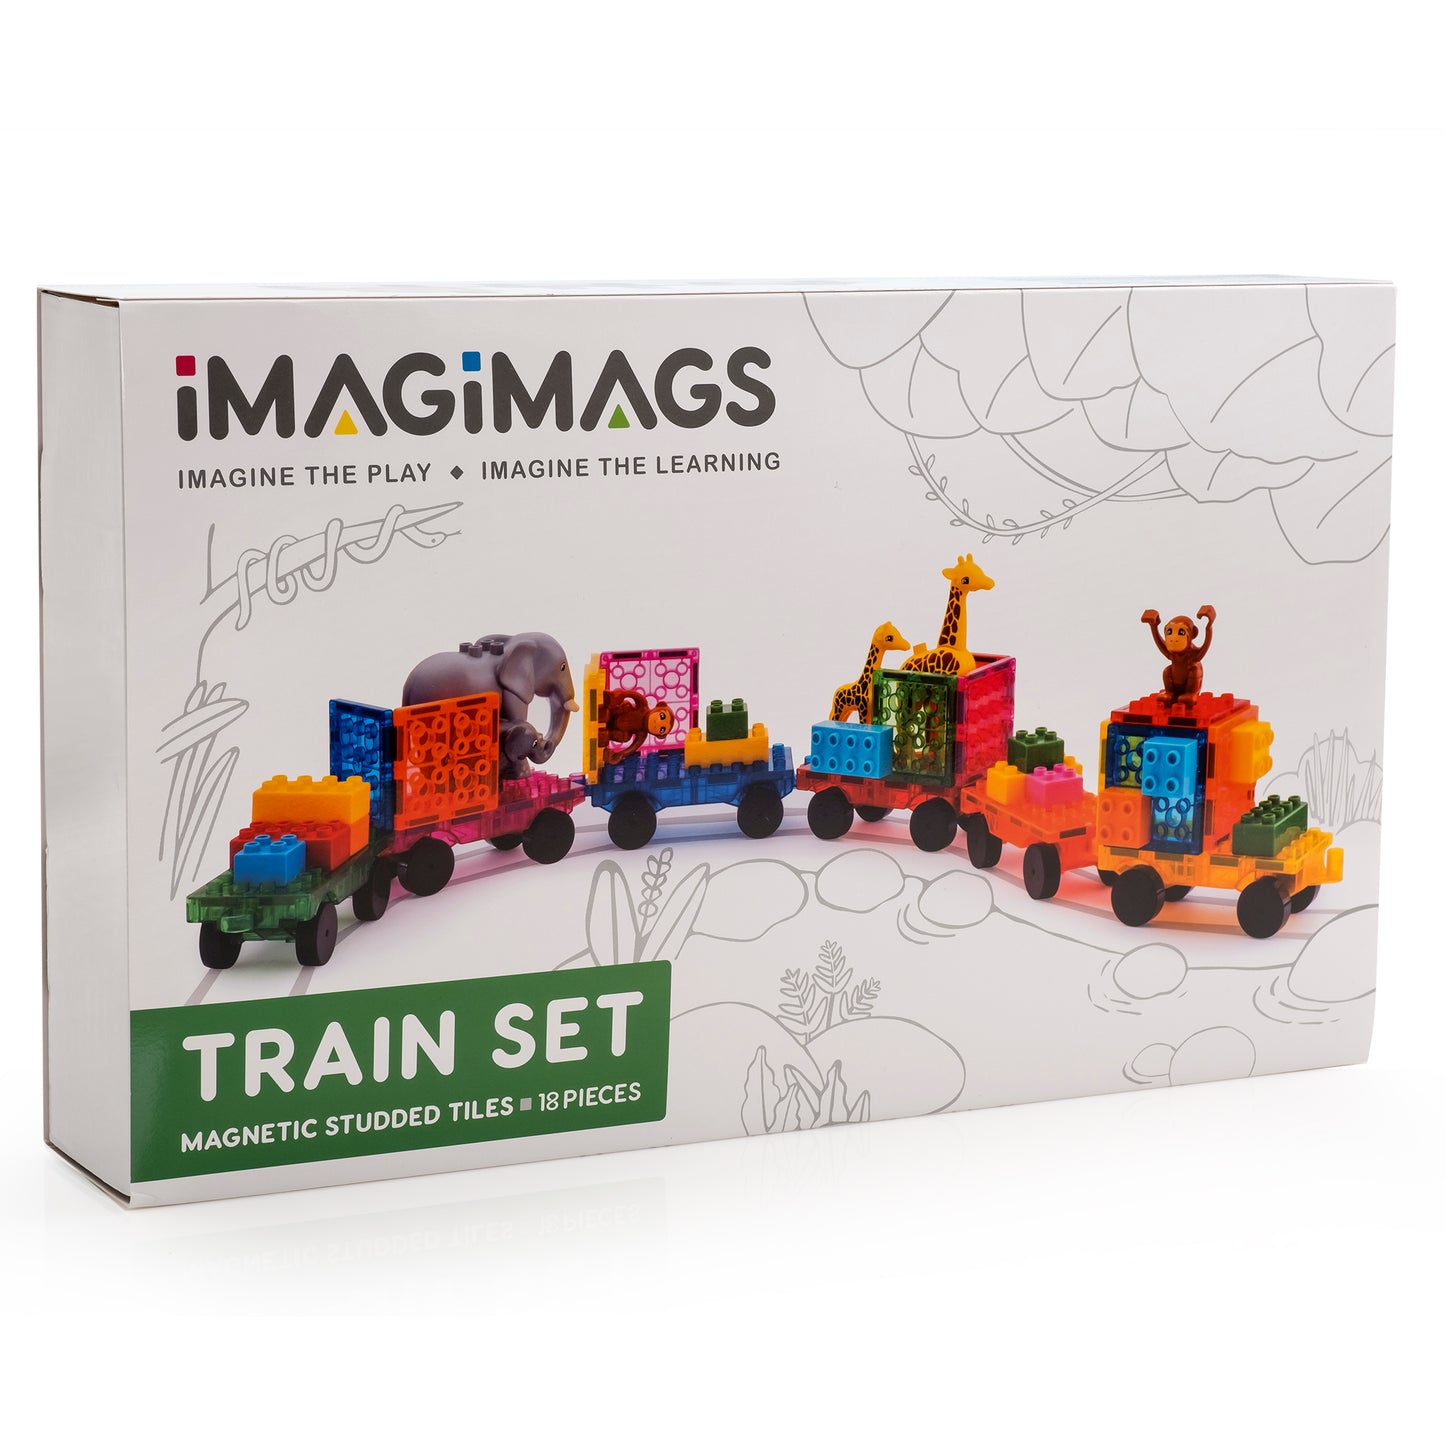 Imagimags Train Set